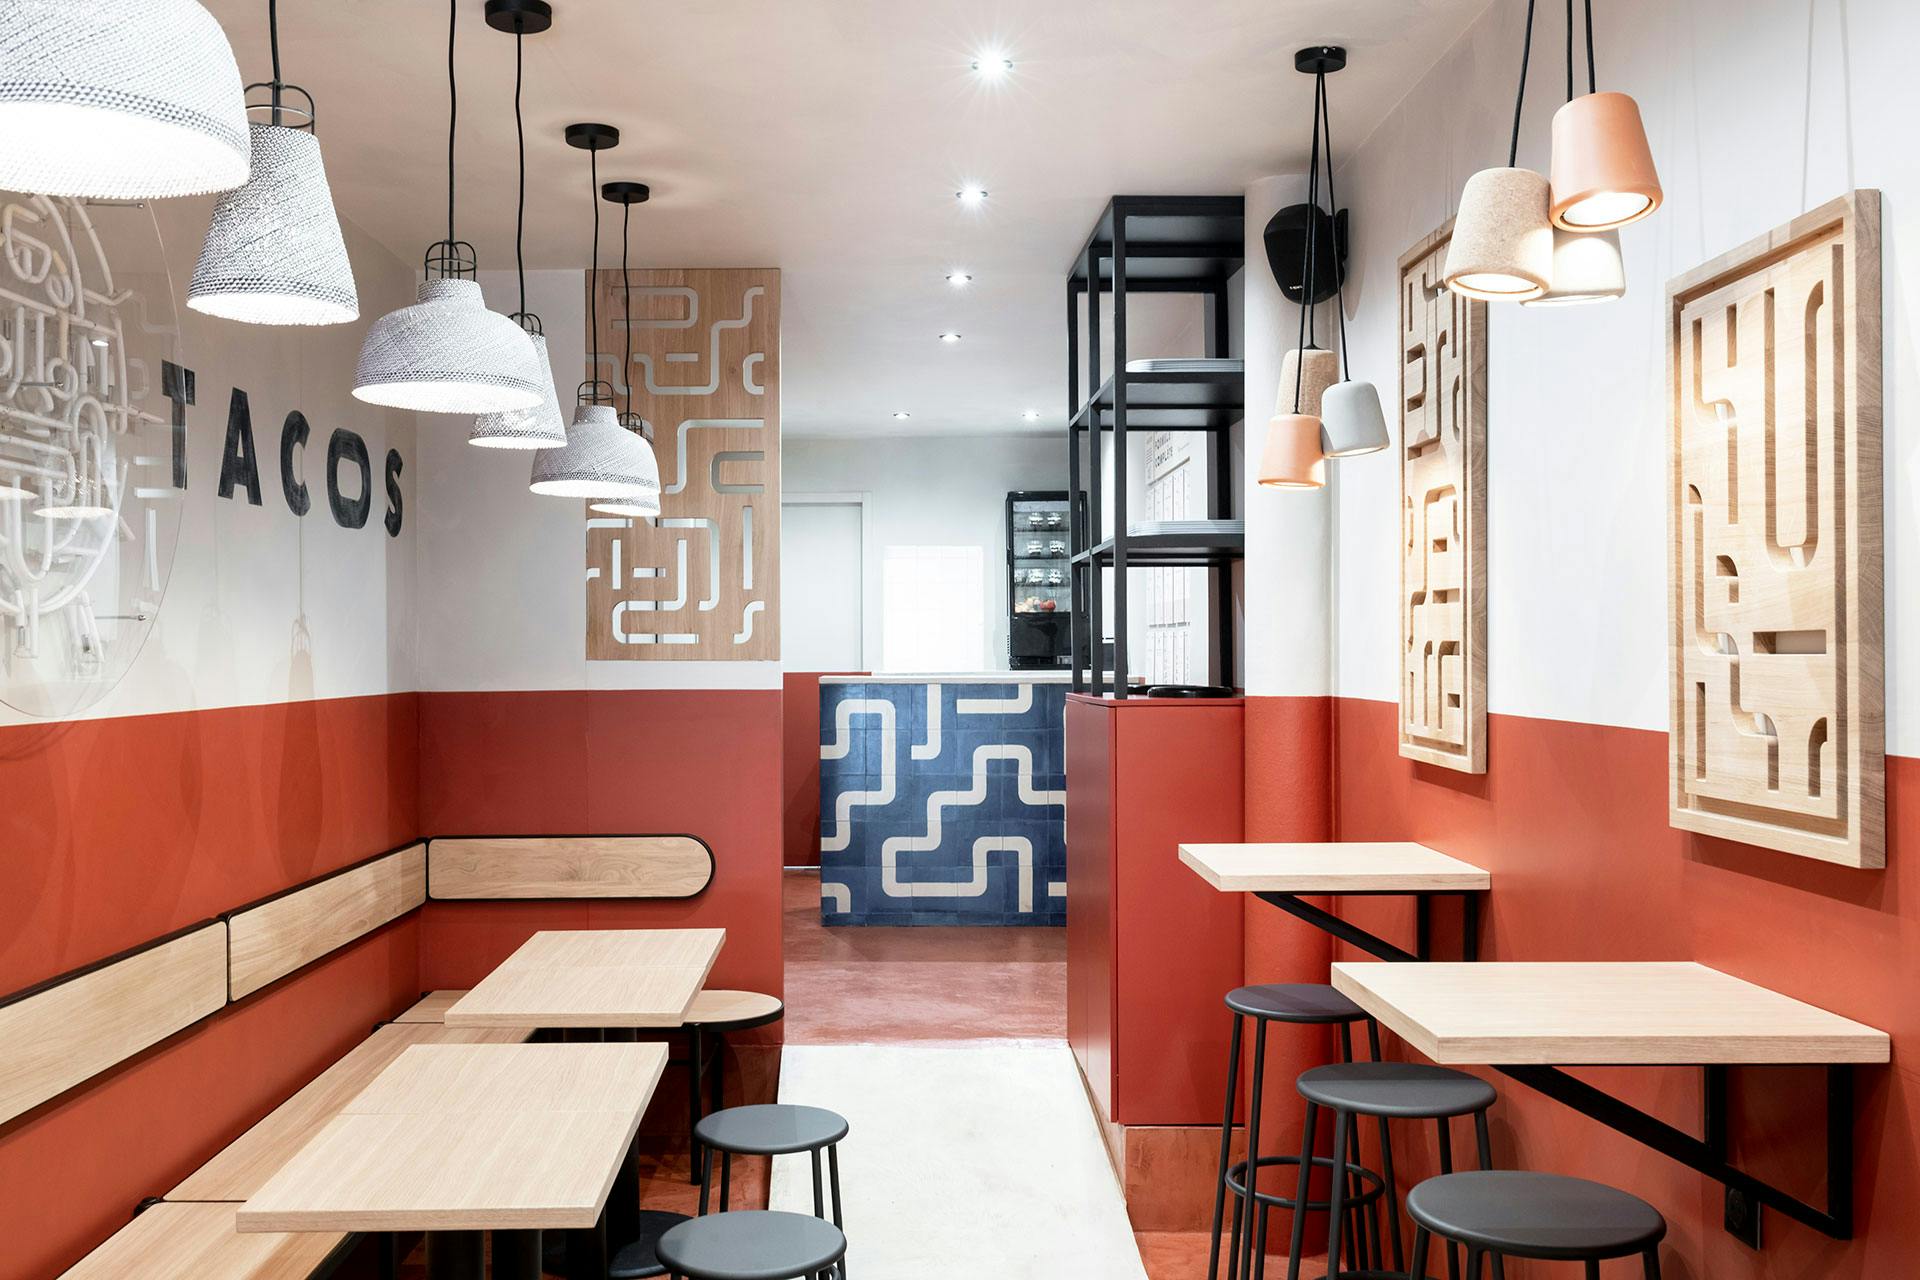 Papas tacos - restaurant - Bordeaux - identity - interior architecture - graphic